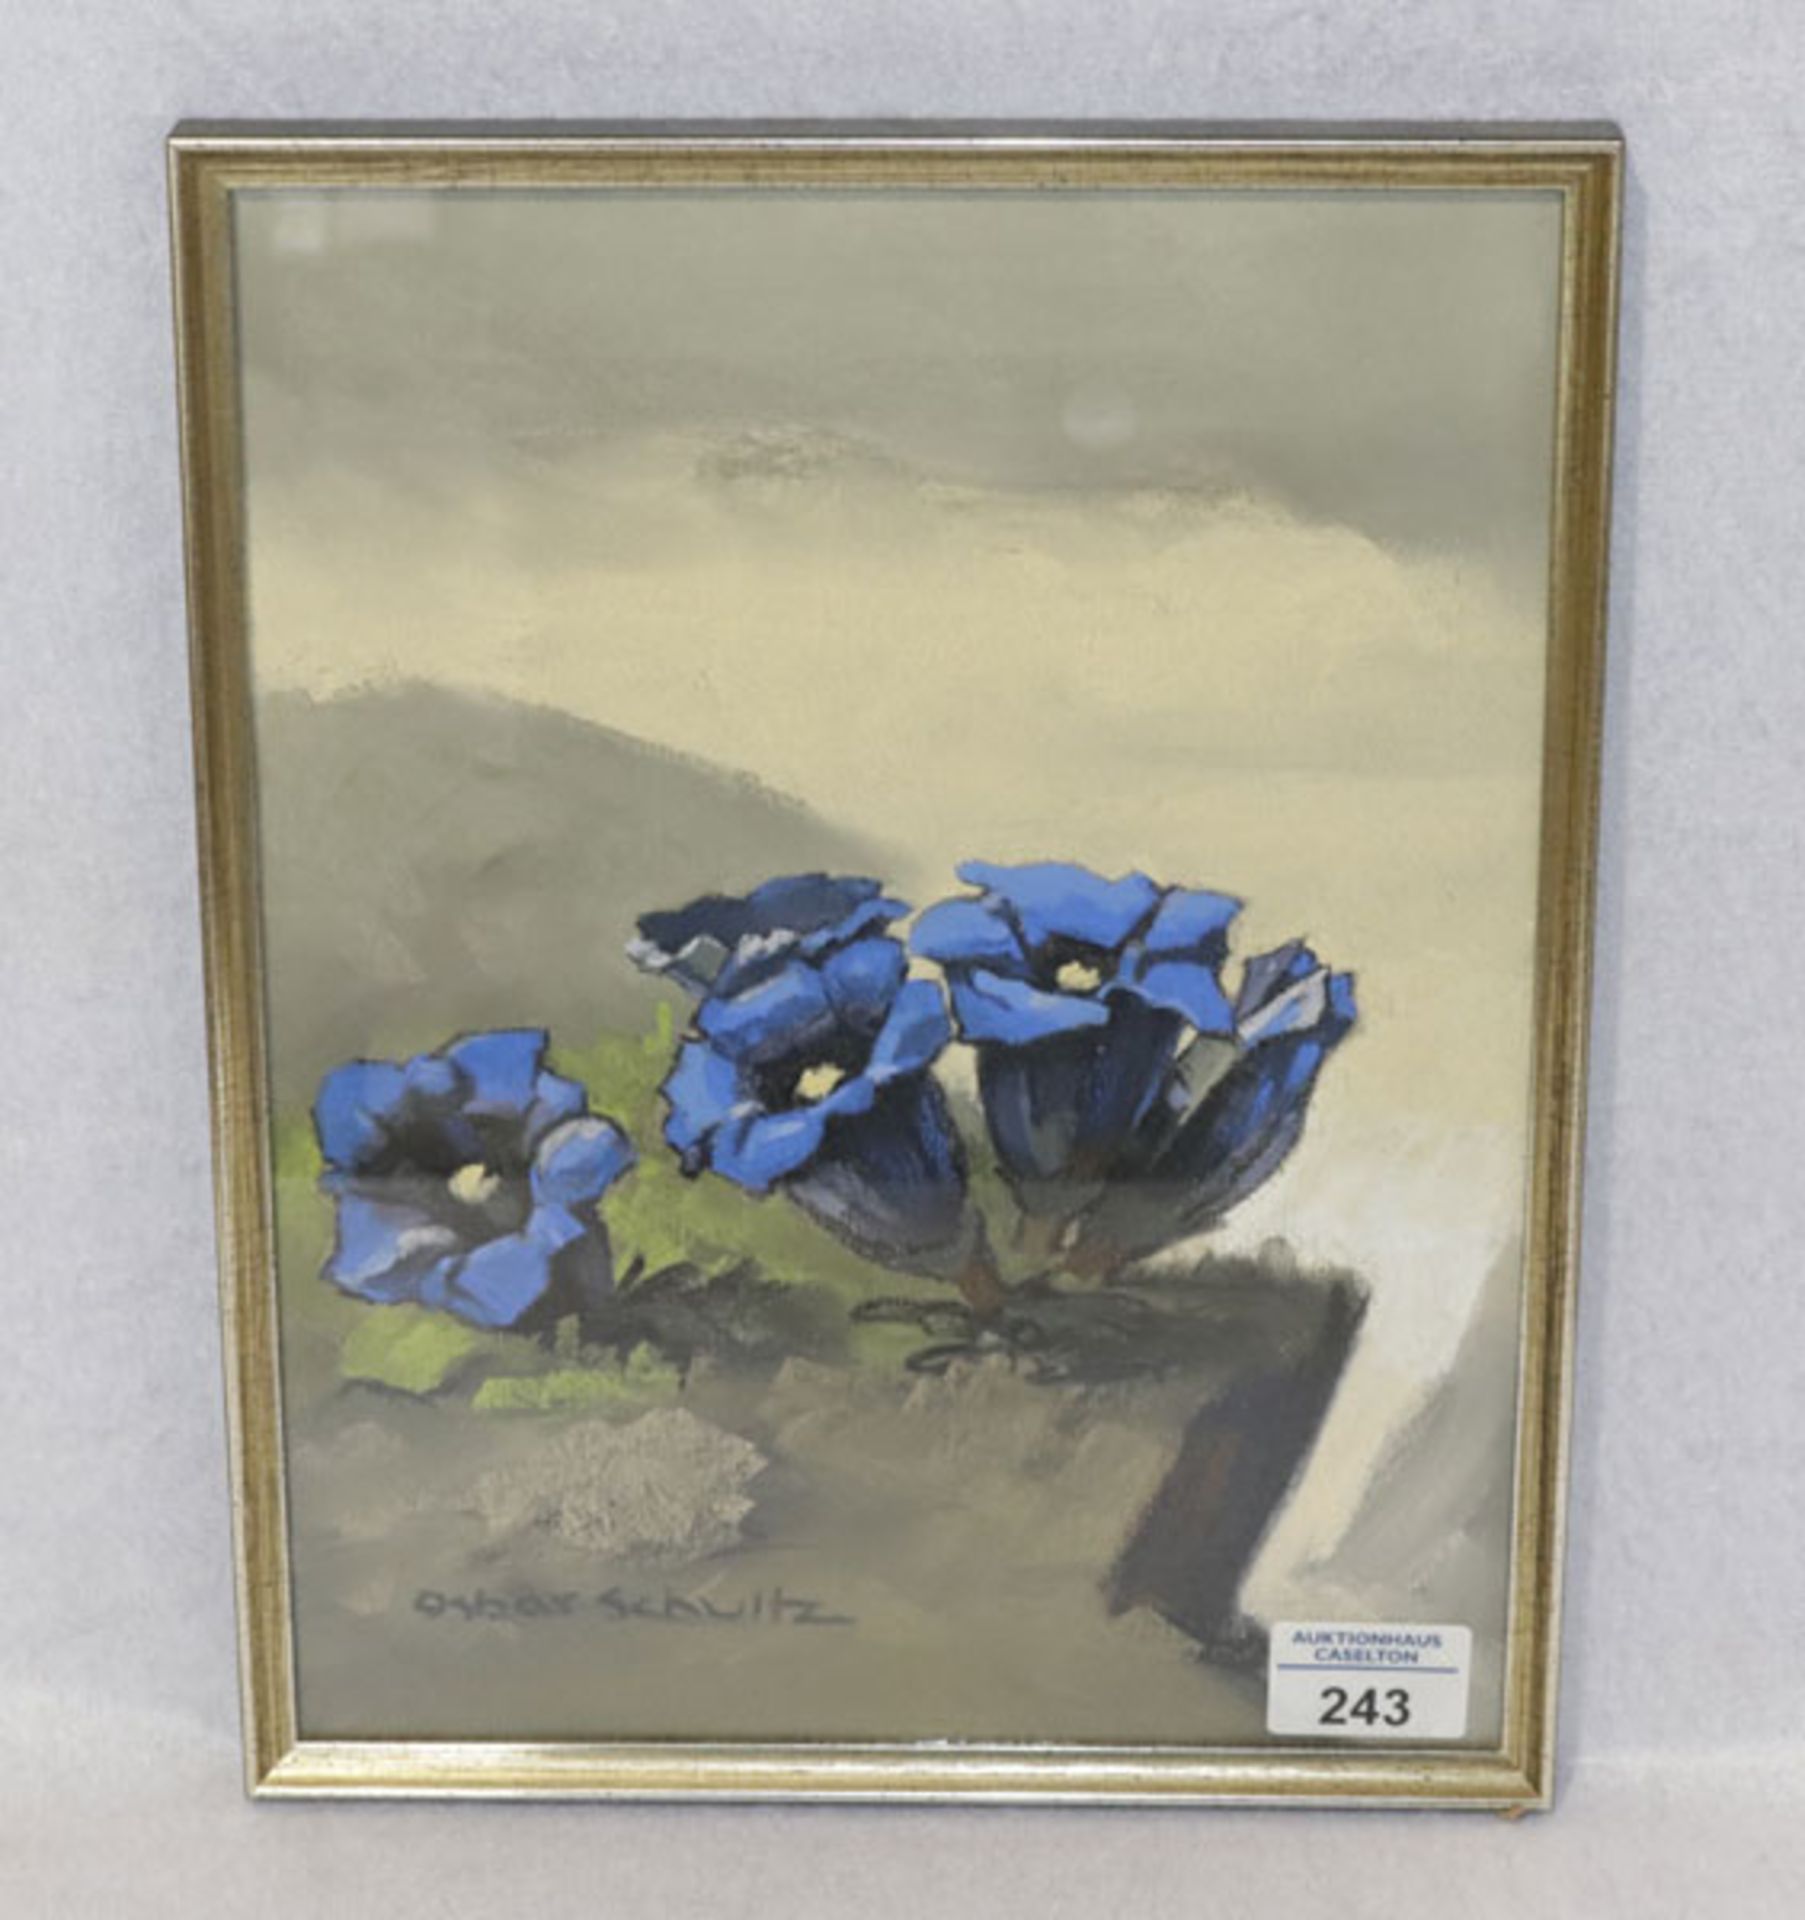 Gemälde Pastell 'Enzian', signiert Oskar Schultz, , * 11.5.1892 Warwen + 21.3.1971 Garmisch, Maler, 